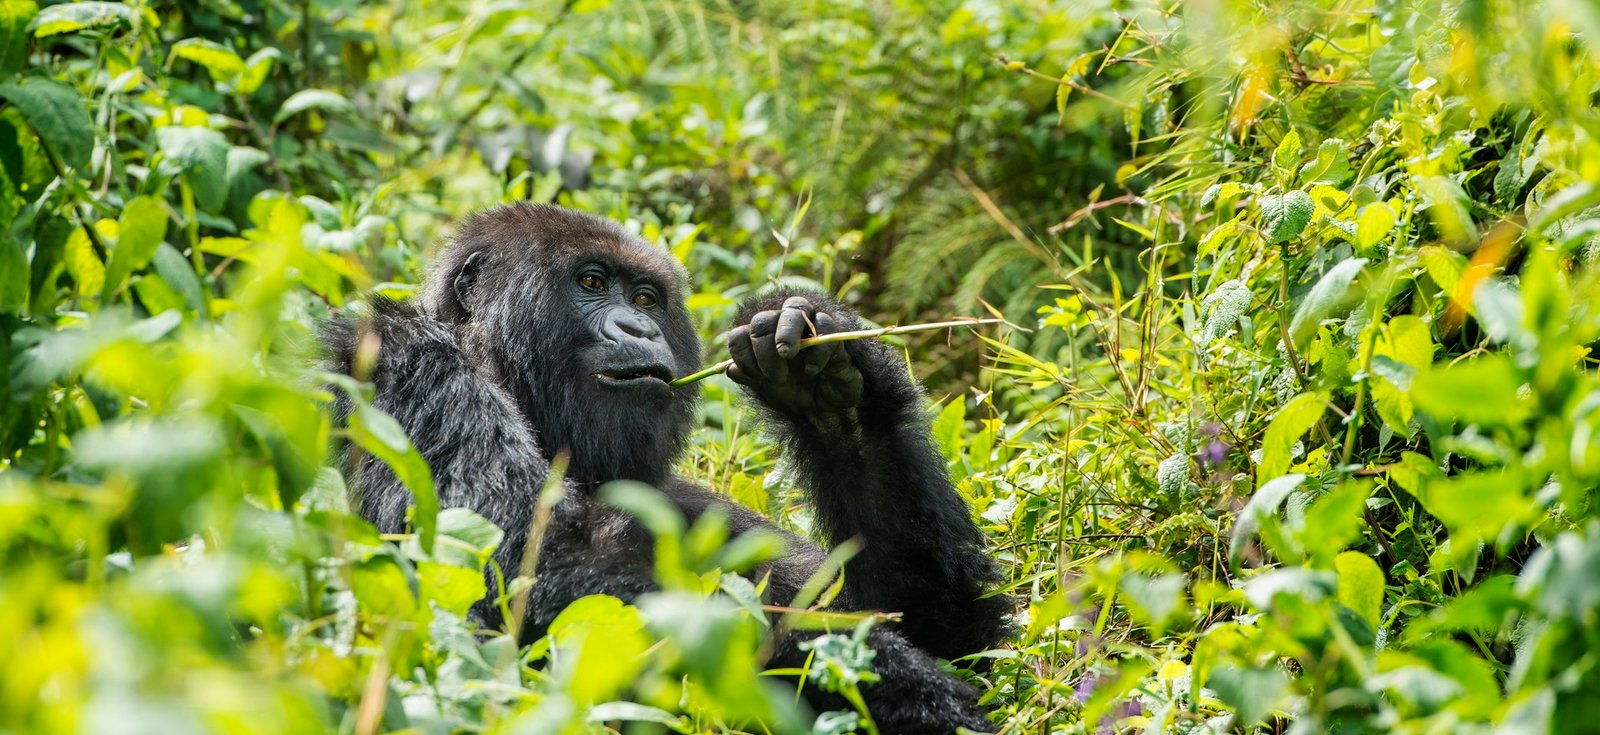 Mountain gorilla feeding habits